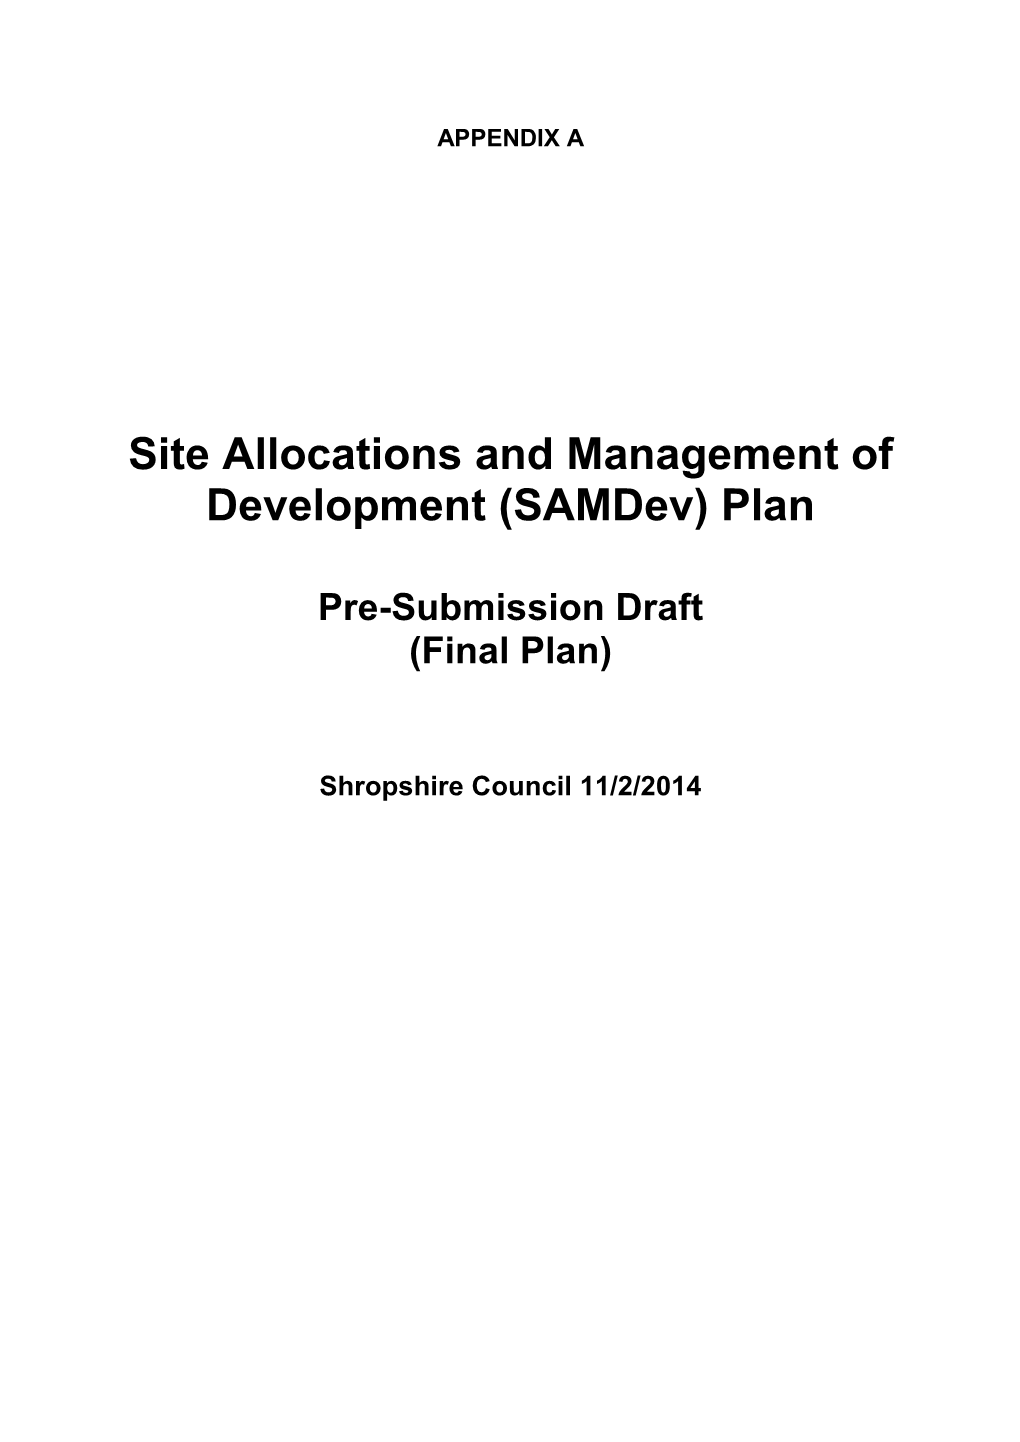 Site Allocations and Management of Development (Samdev) Plan